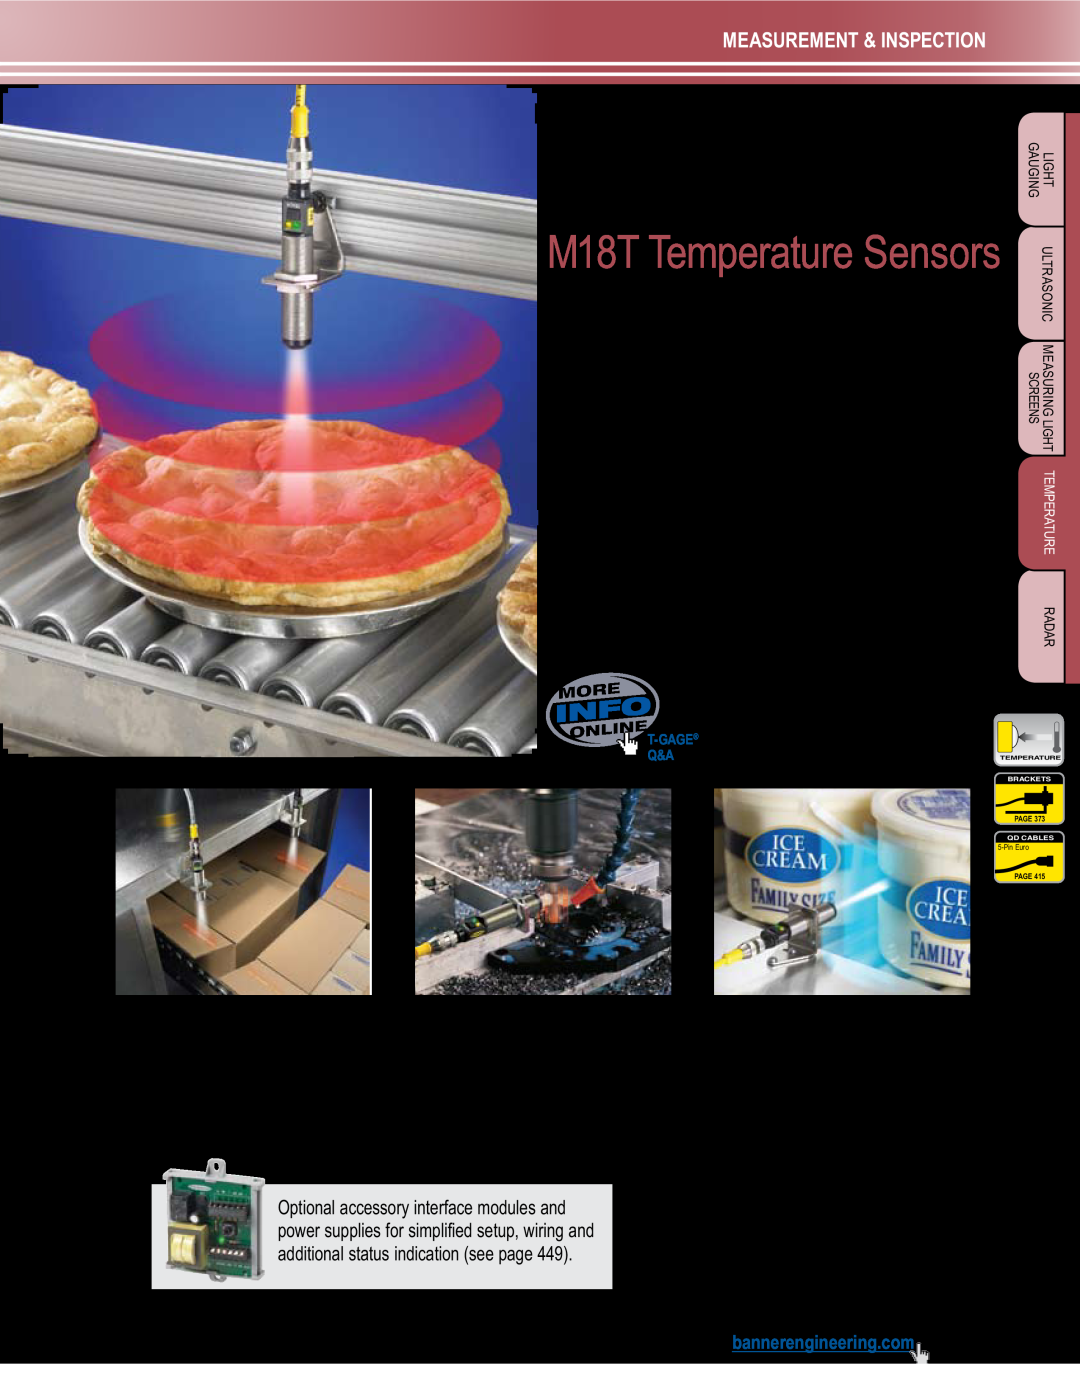 Banner L-GAGE manual T-Gage, M18T Temperature Sensors, Measurement & Inspection 